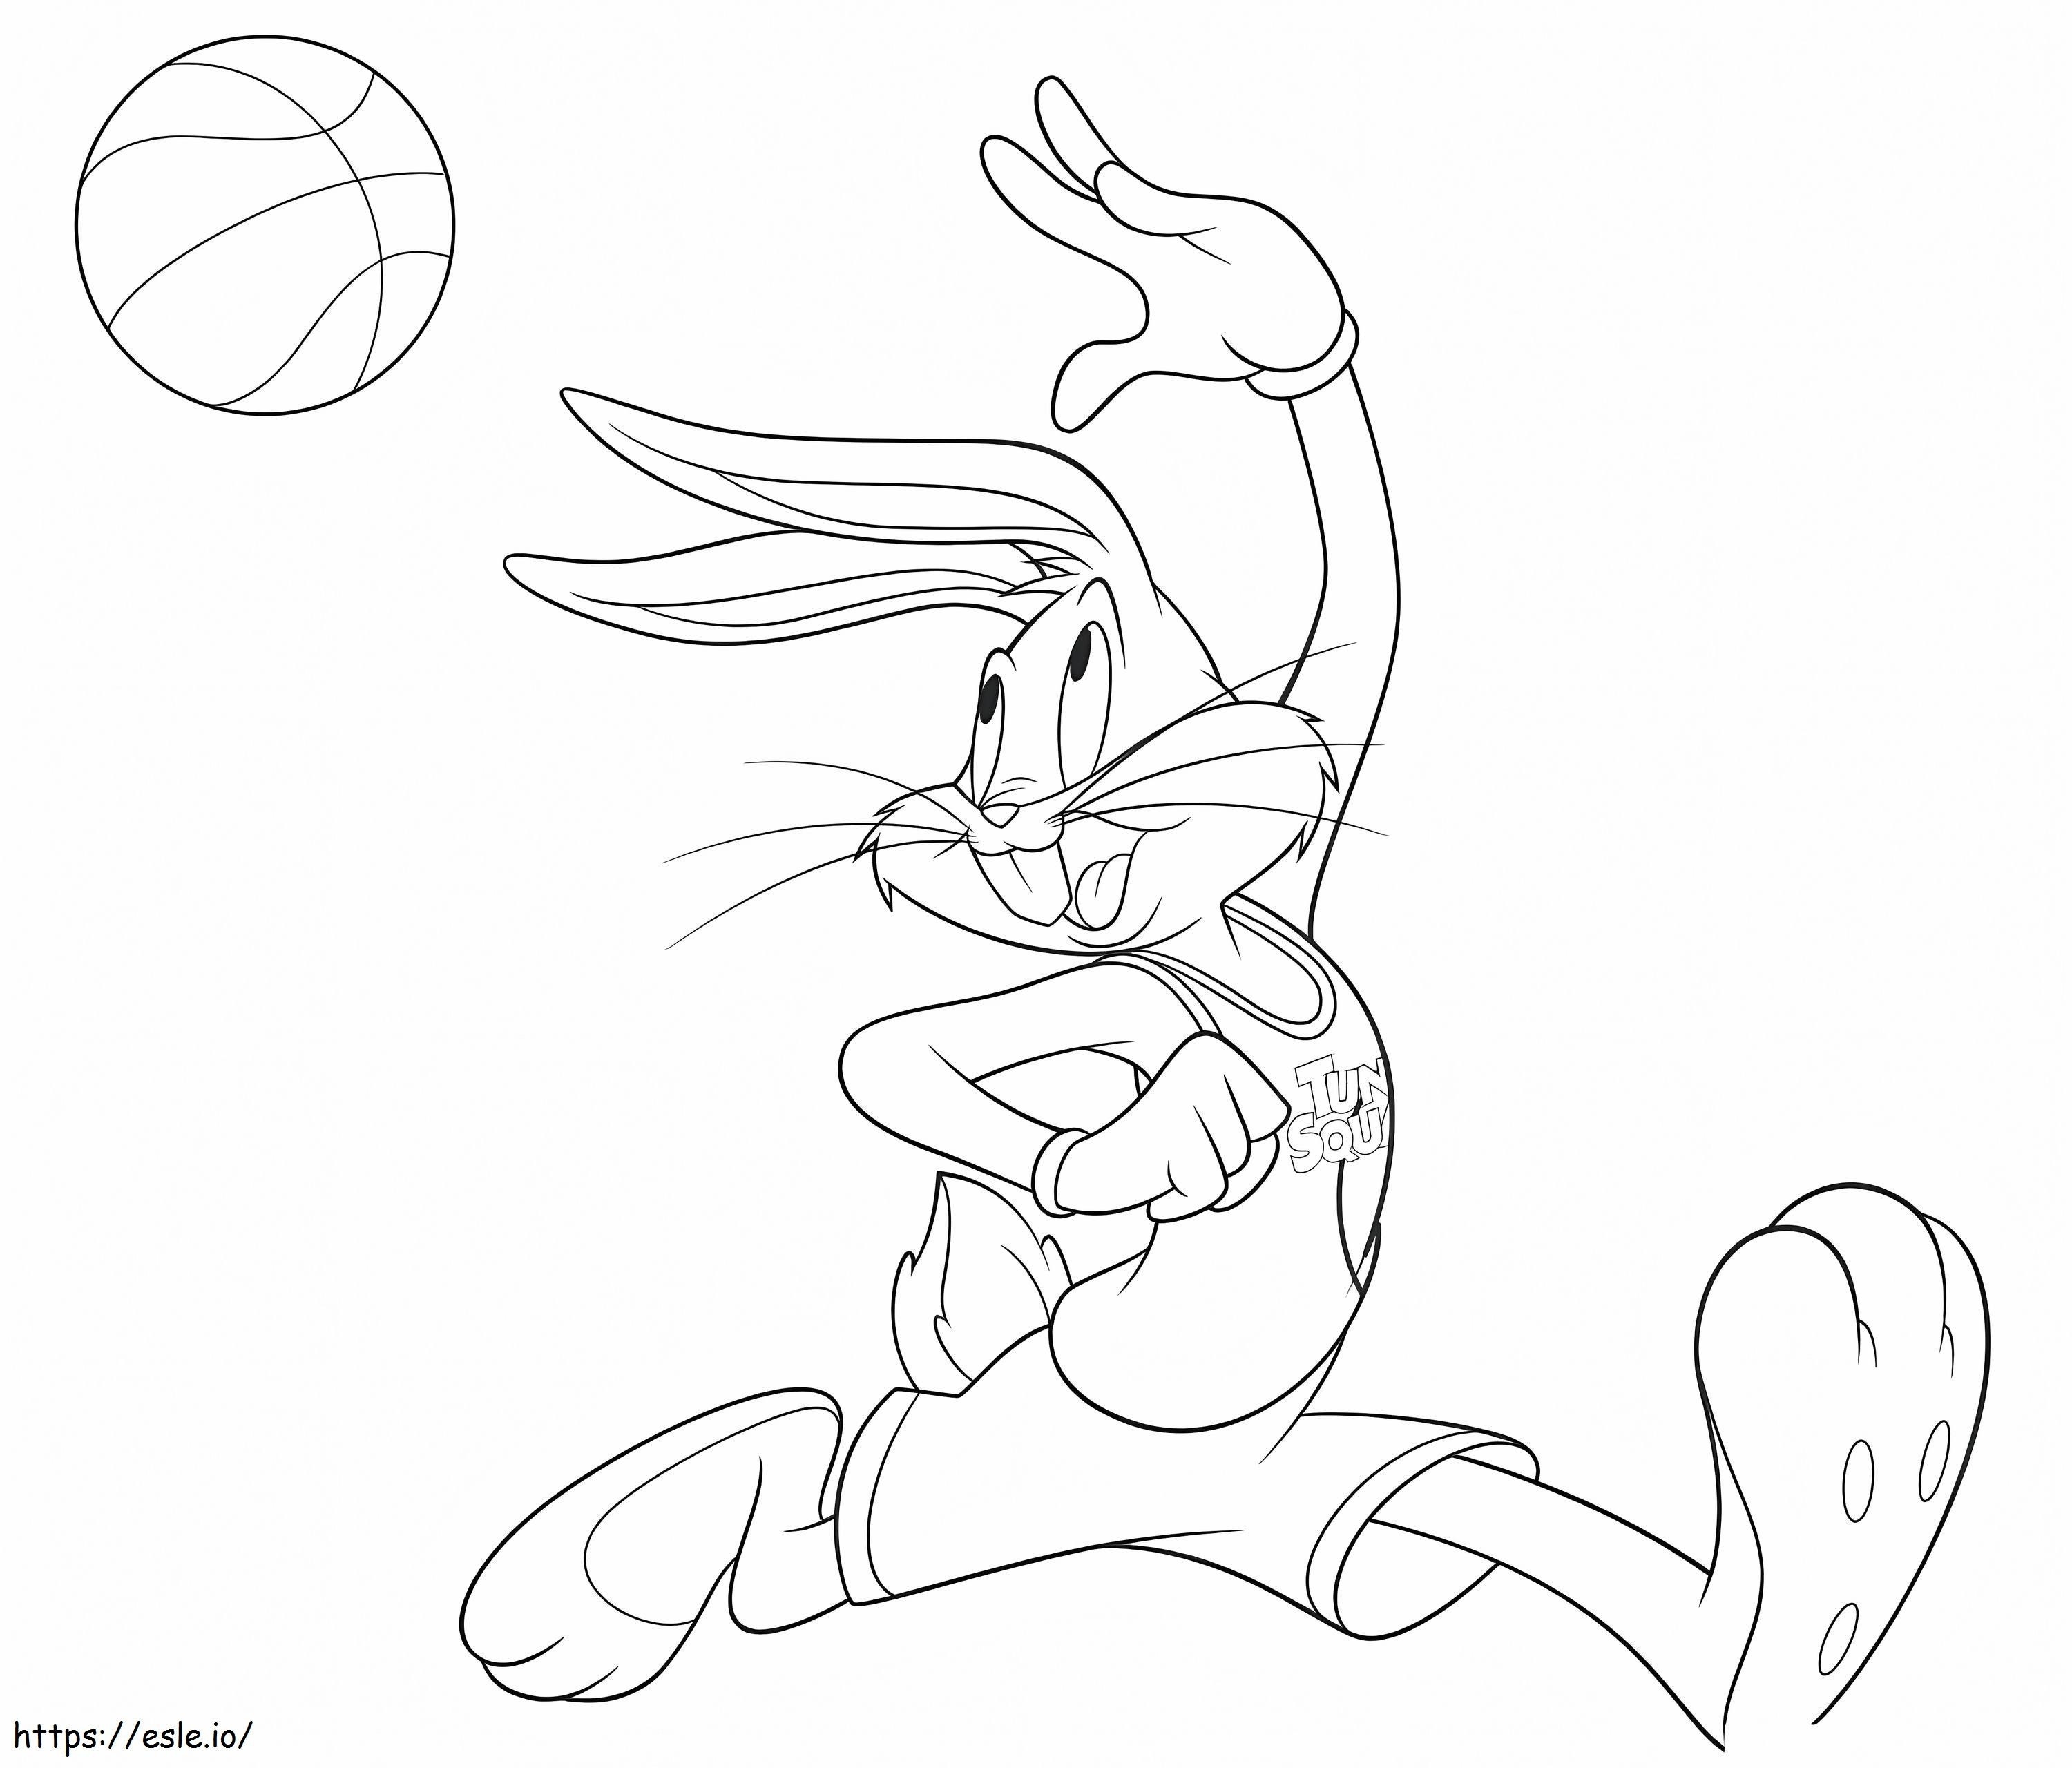 Bugs Bunny Playing Basketball coloring page